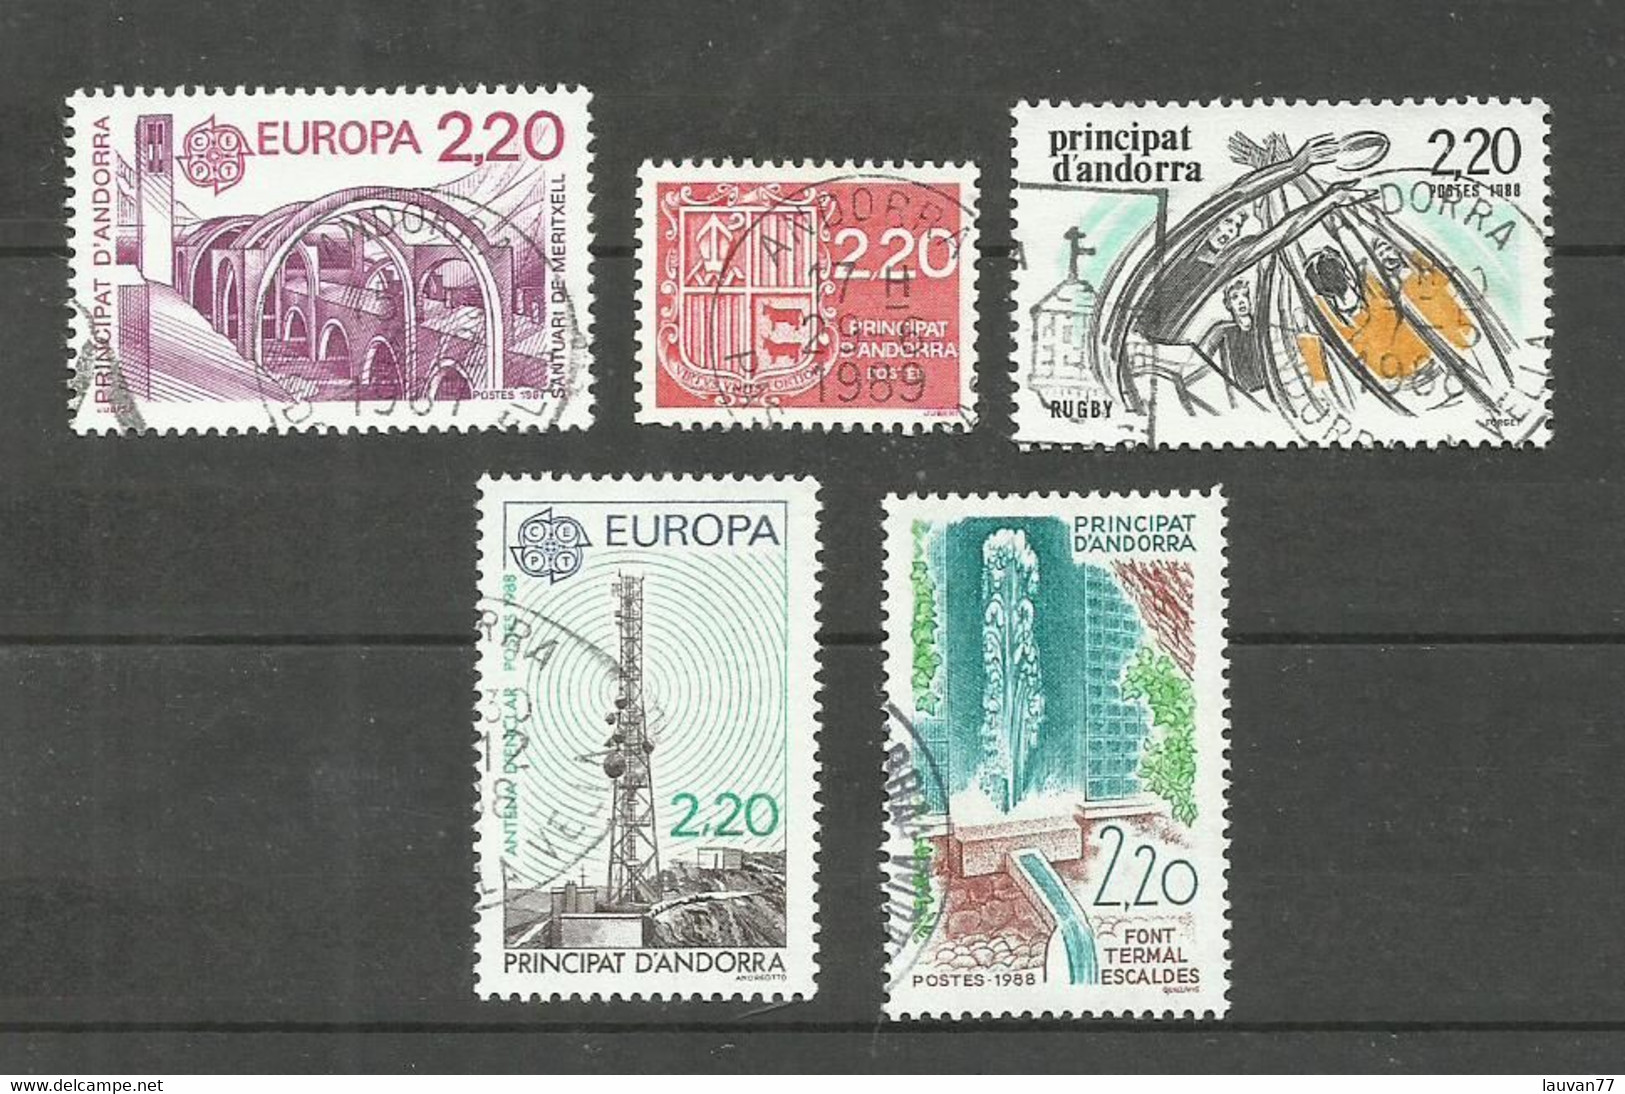 Andorre Français N°358, 366, 368, 369, 371 Cote 4.10€ - Used Stamps